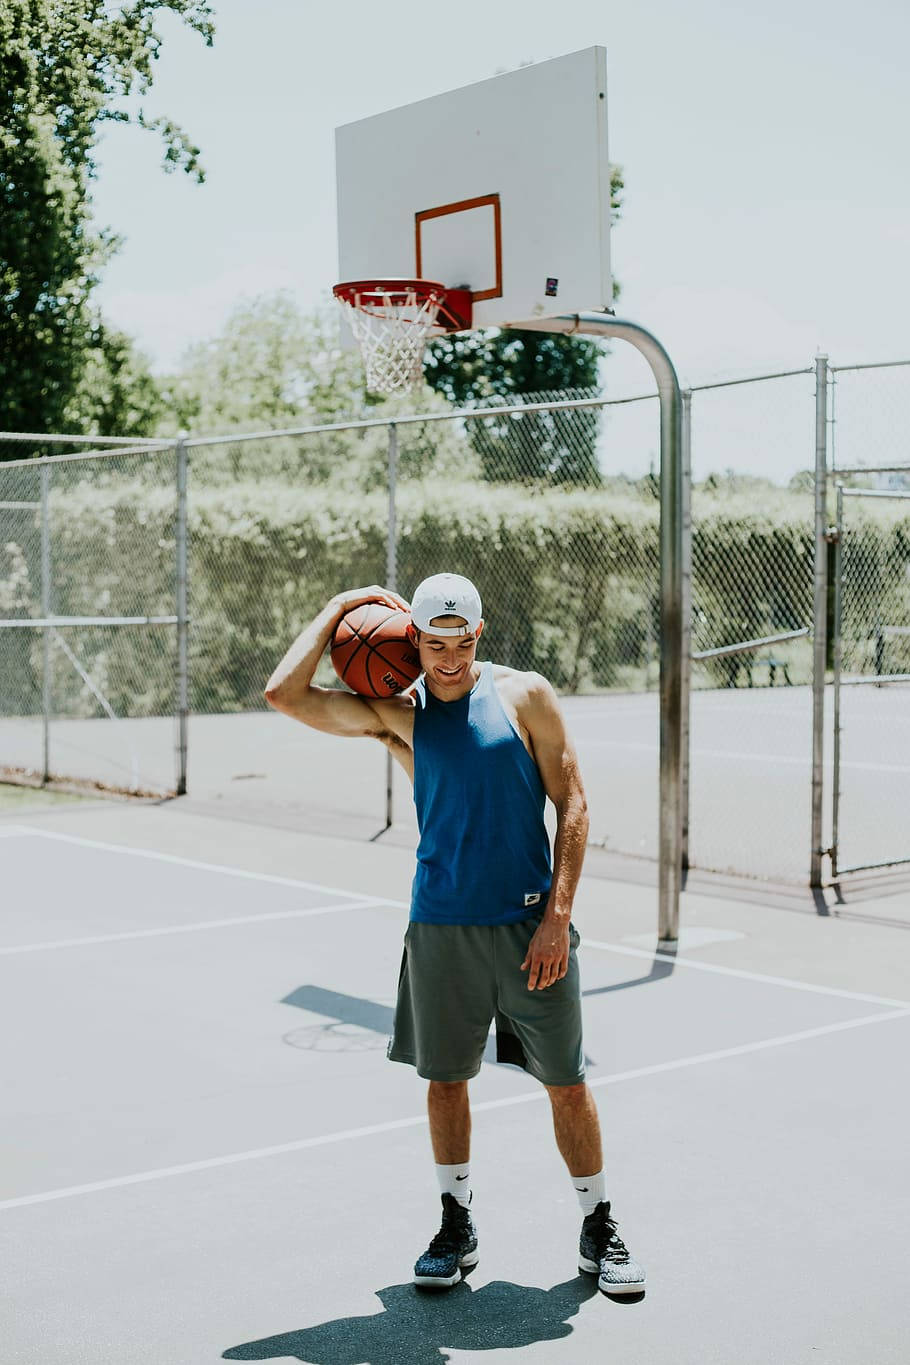 Hot Guy Playing Basketball Wallpaper